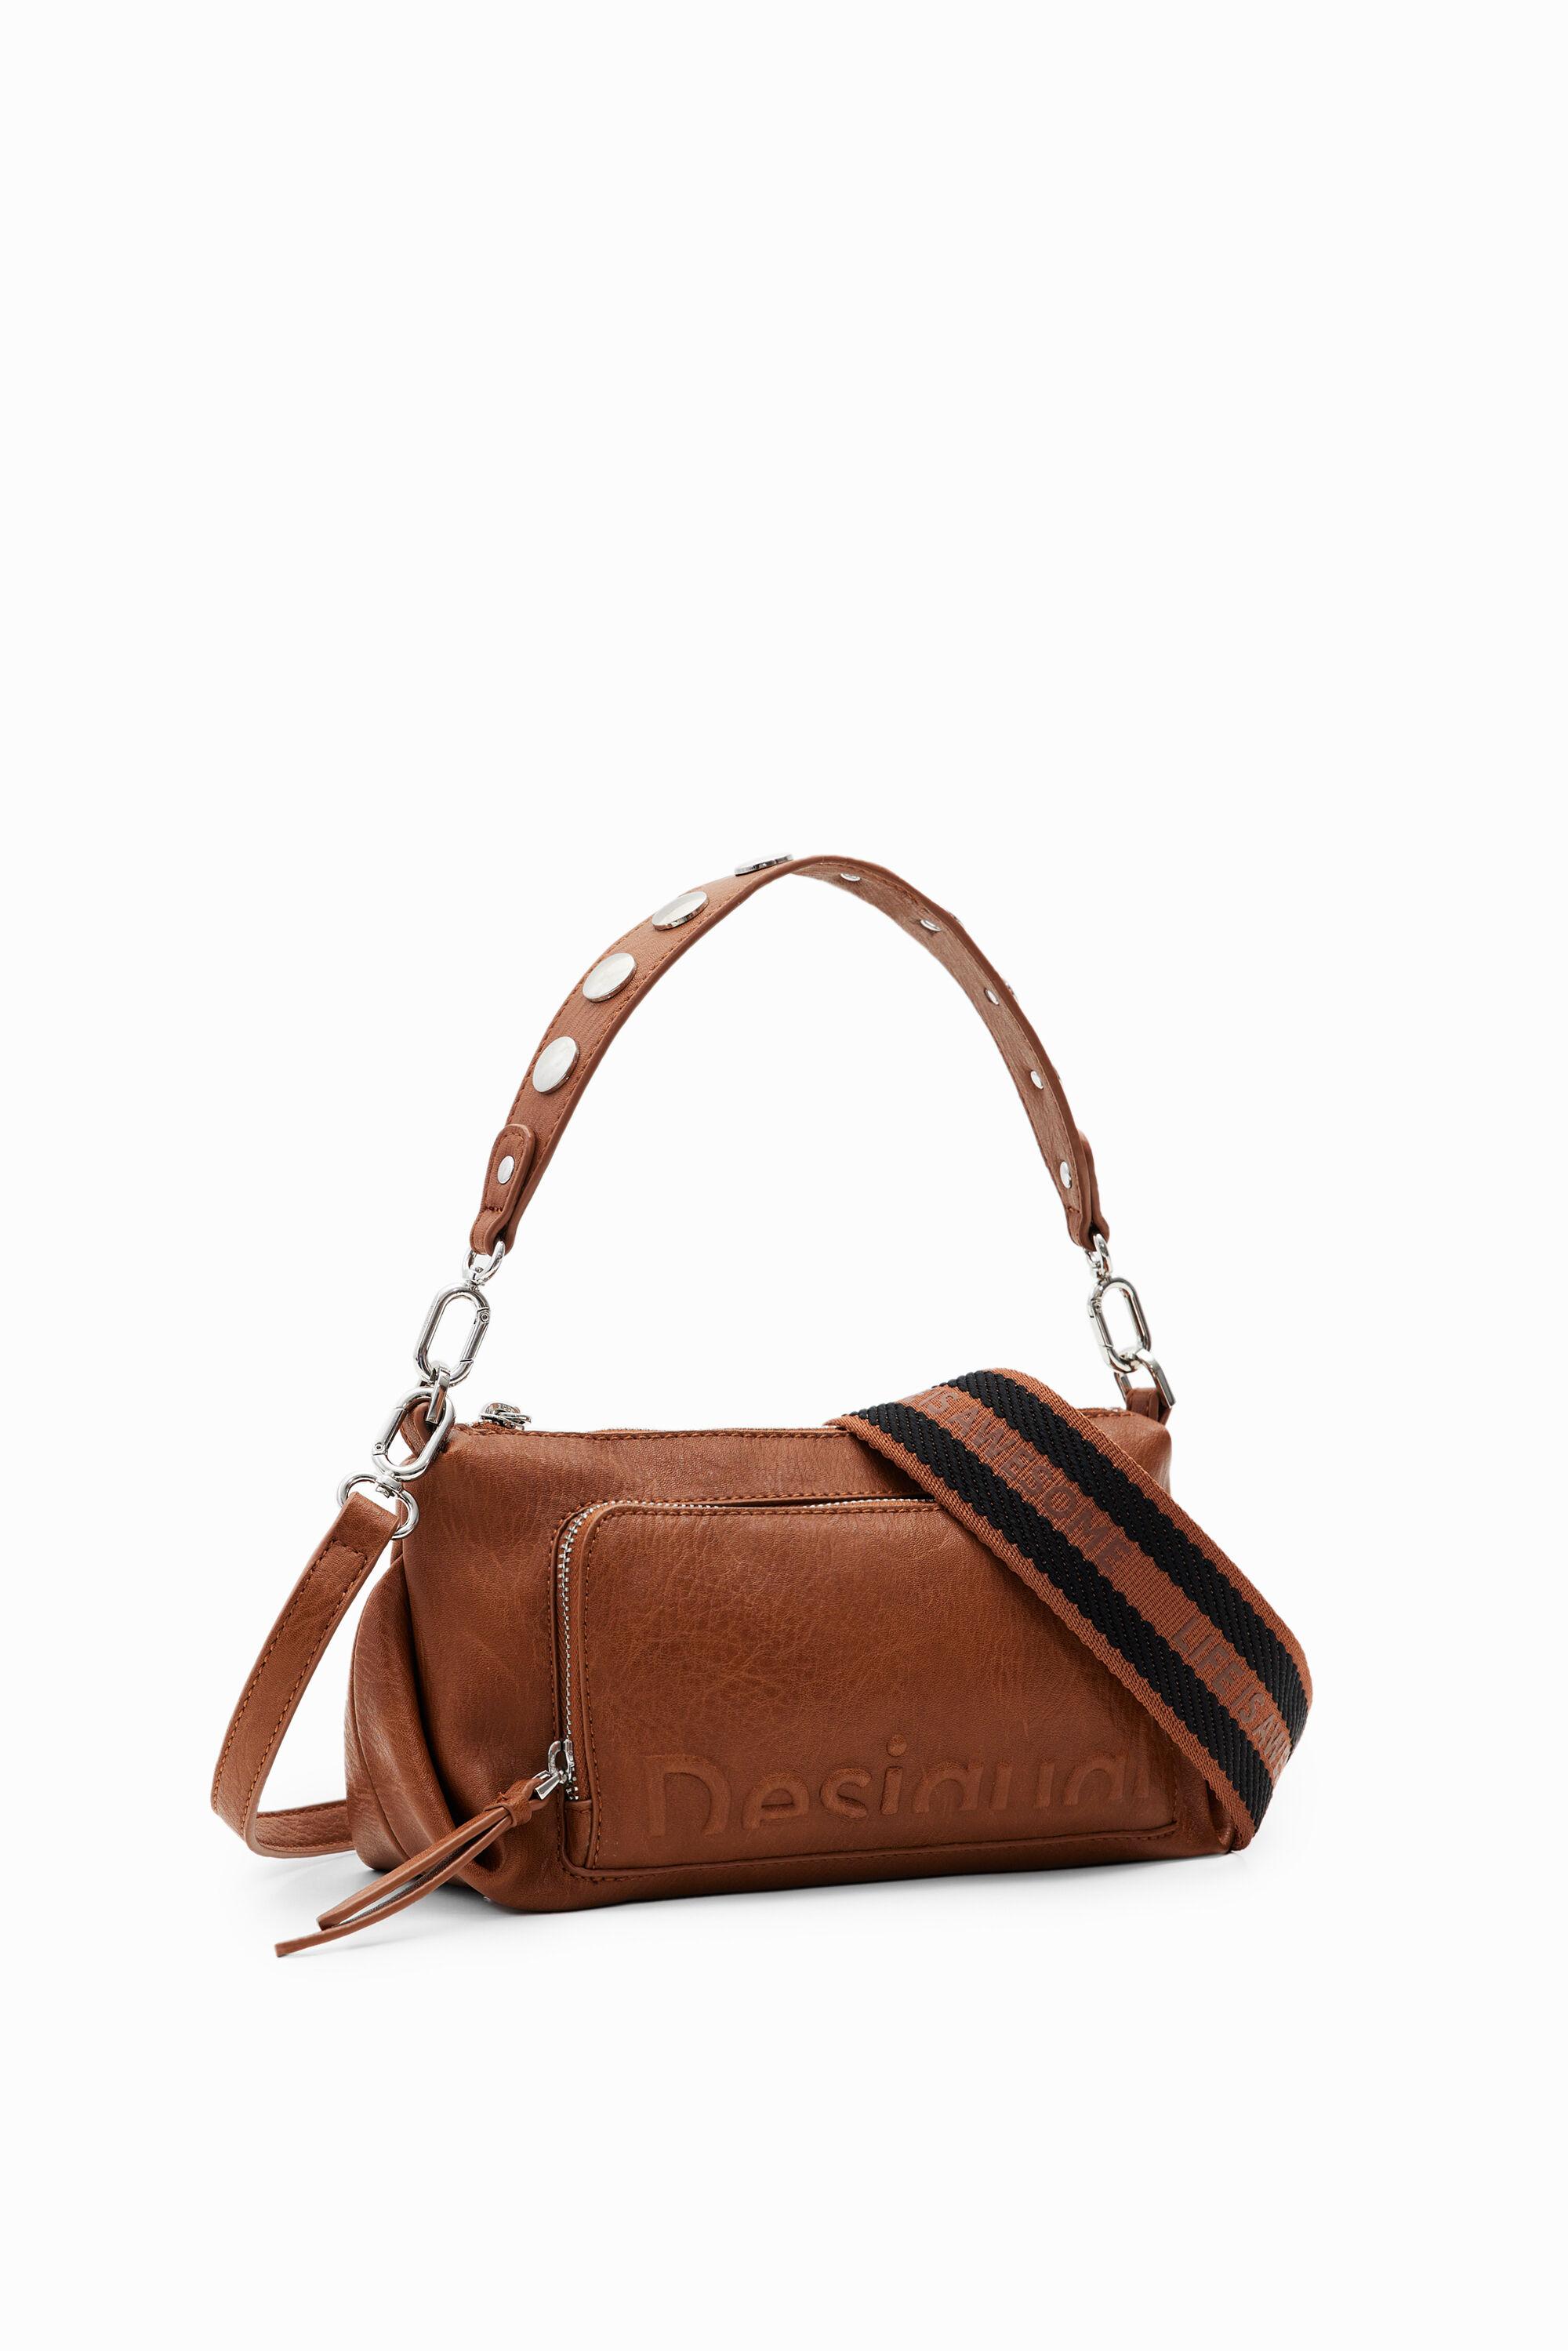 Desigual Midsize Half-logo Crossbody Bag in Brown | Lyst